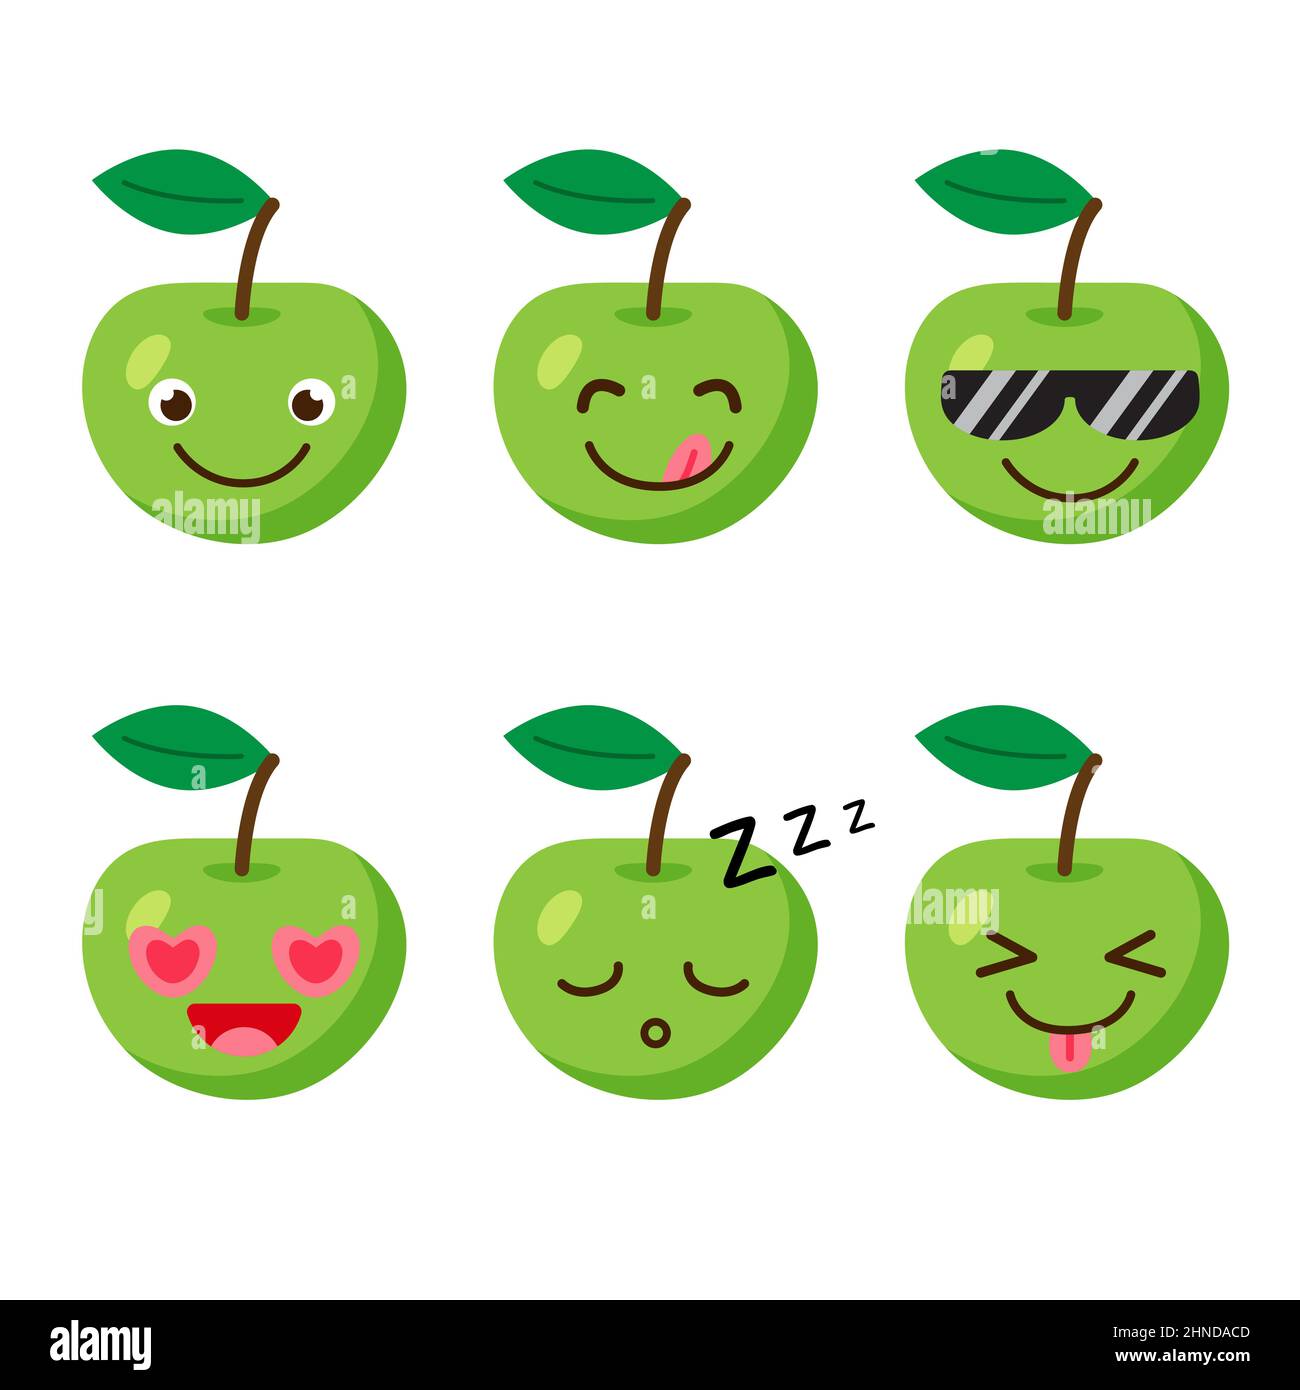 Dibujo de manzana kawaii fotografías e imágenes de alta resolución - Alamy